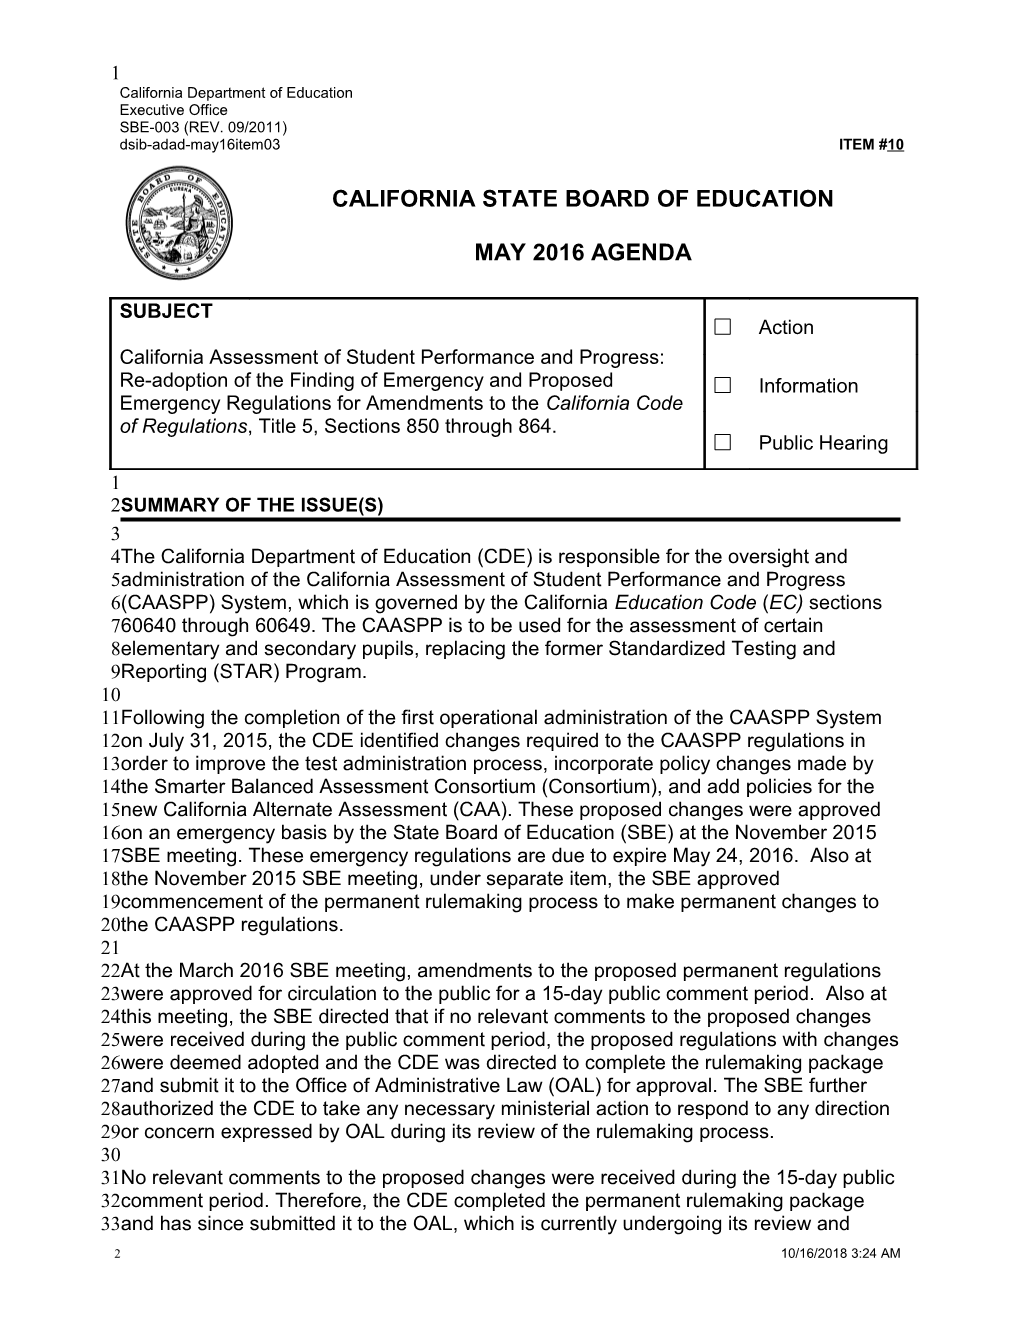 May 2016 Agenda Item 10 - Meeting Agendas (CA State Board of Education)